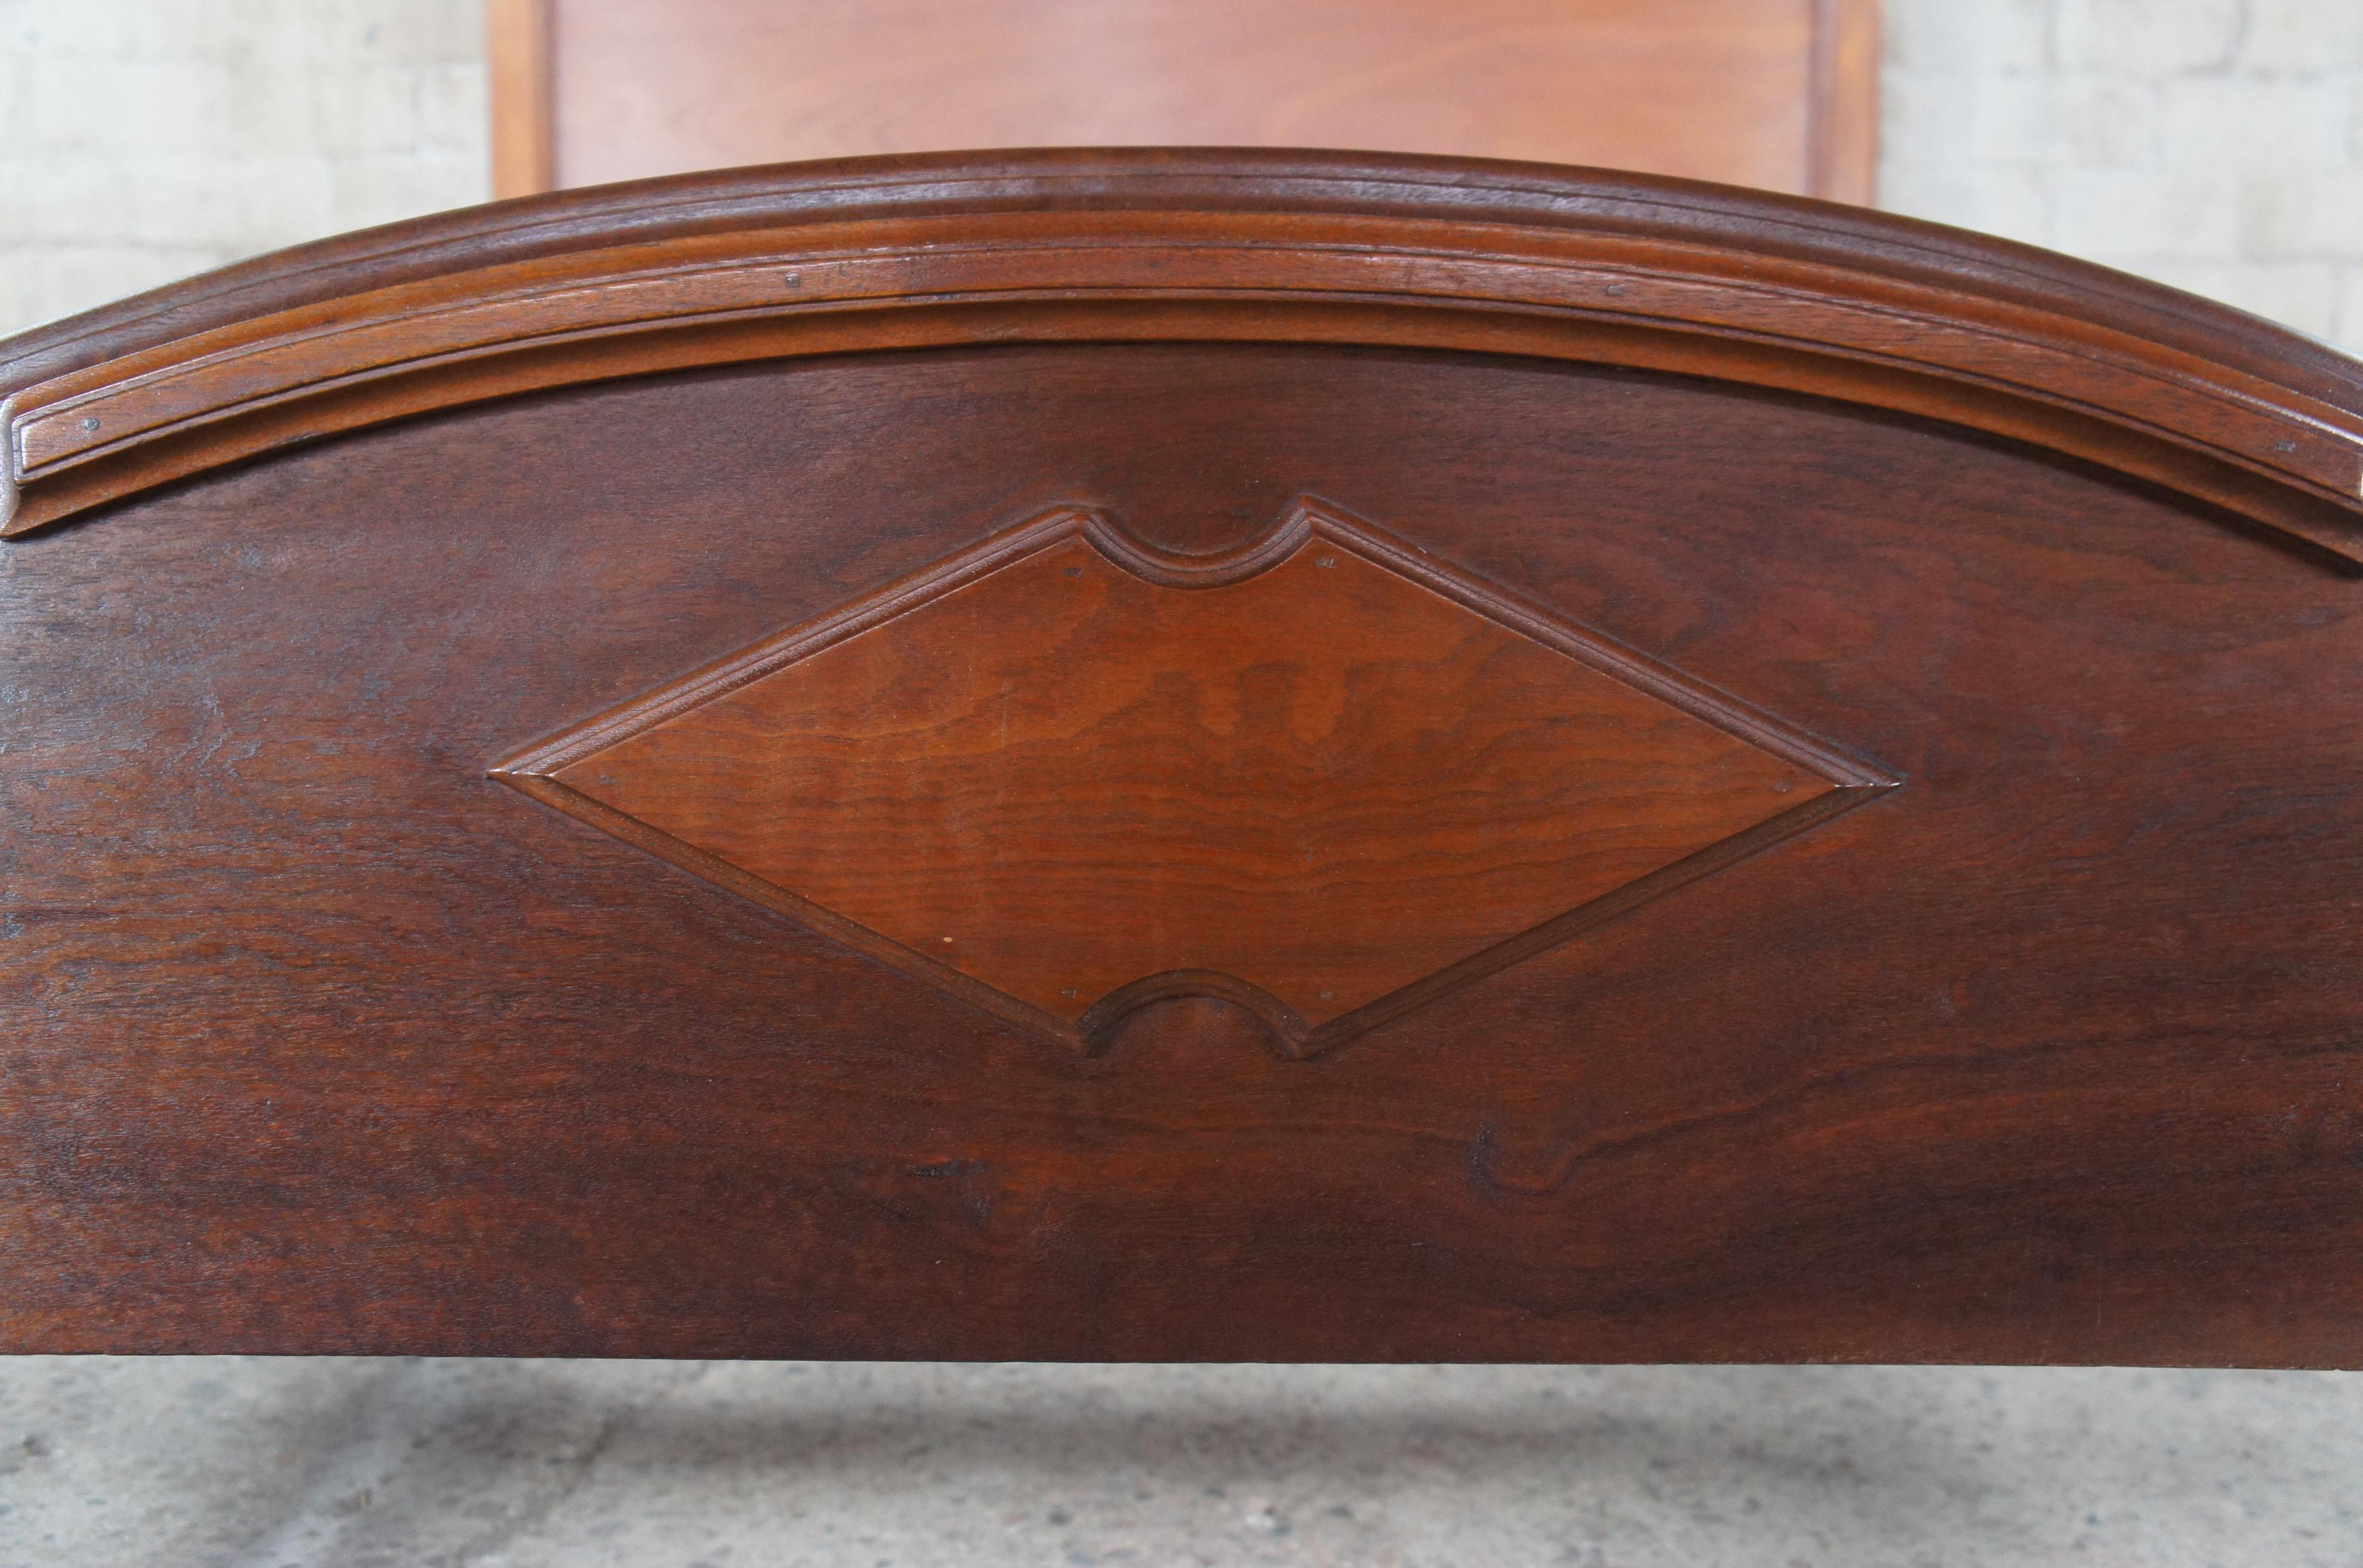 antique victorian bed frame